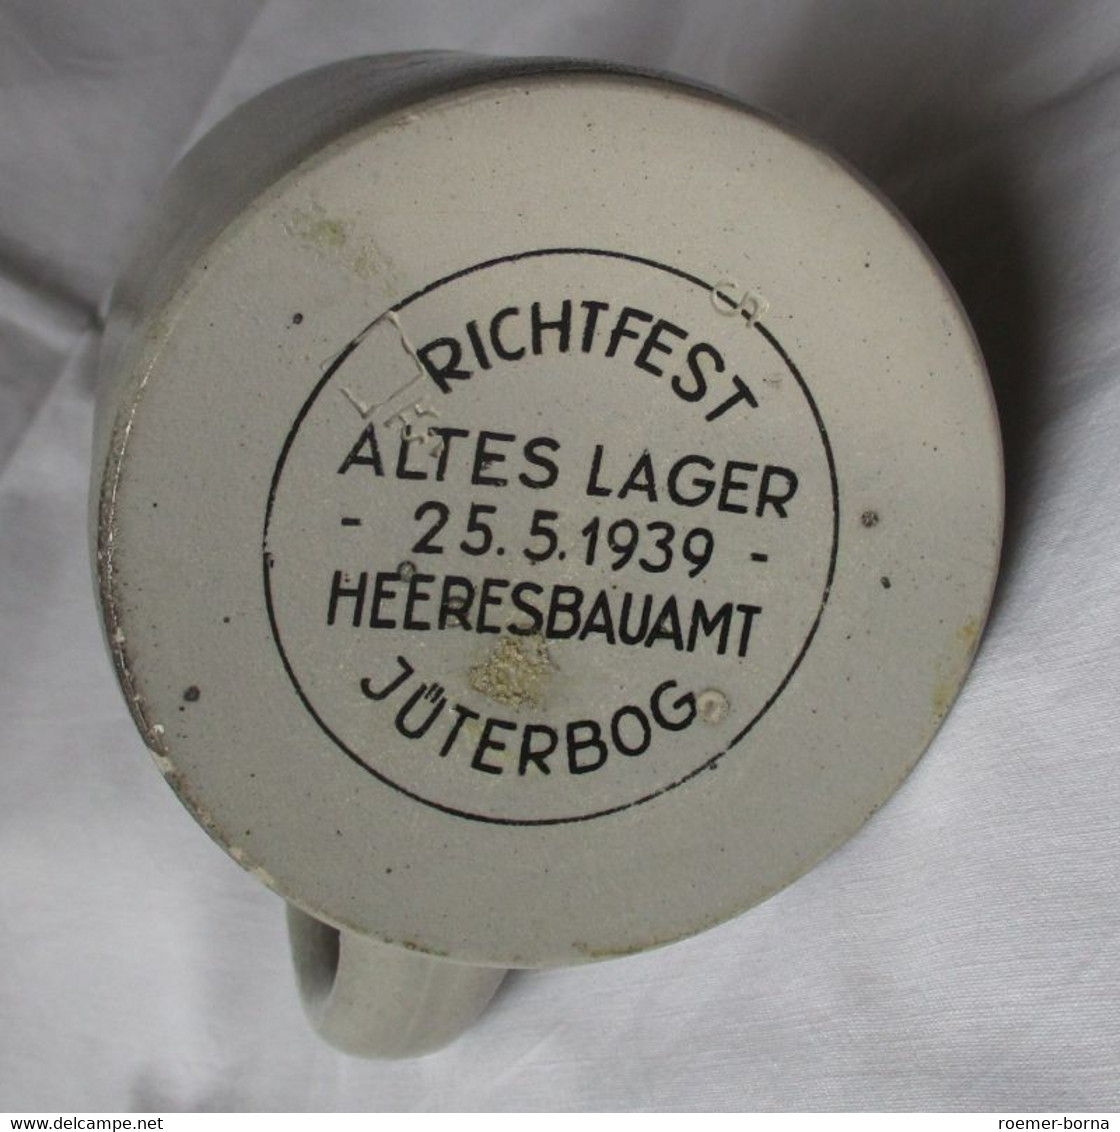 Steinzeug Bierkrug Richtfest Altes Lager Heeresbauamt Jüterbog 1939 (134771)